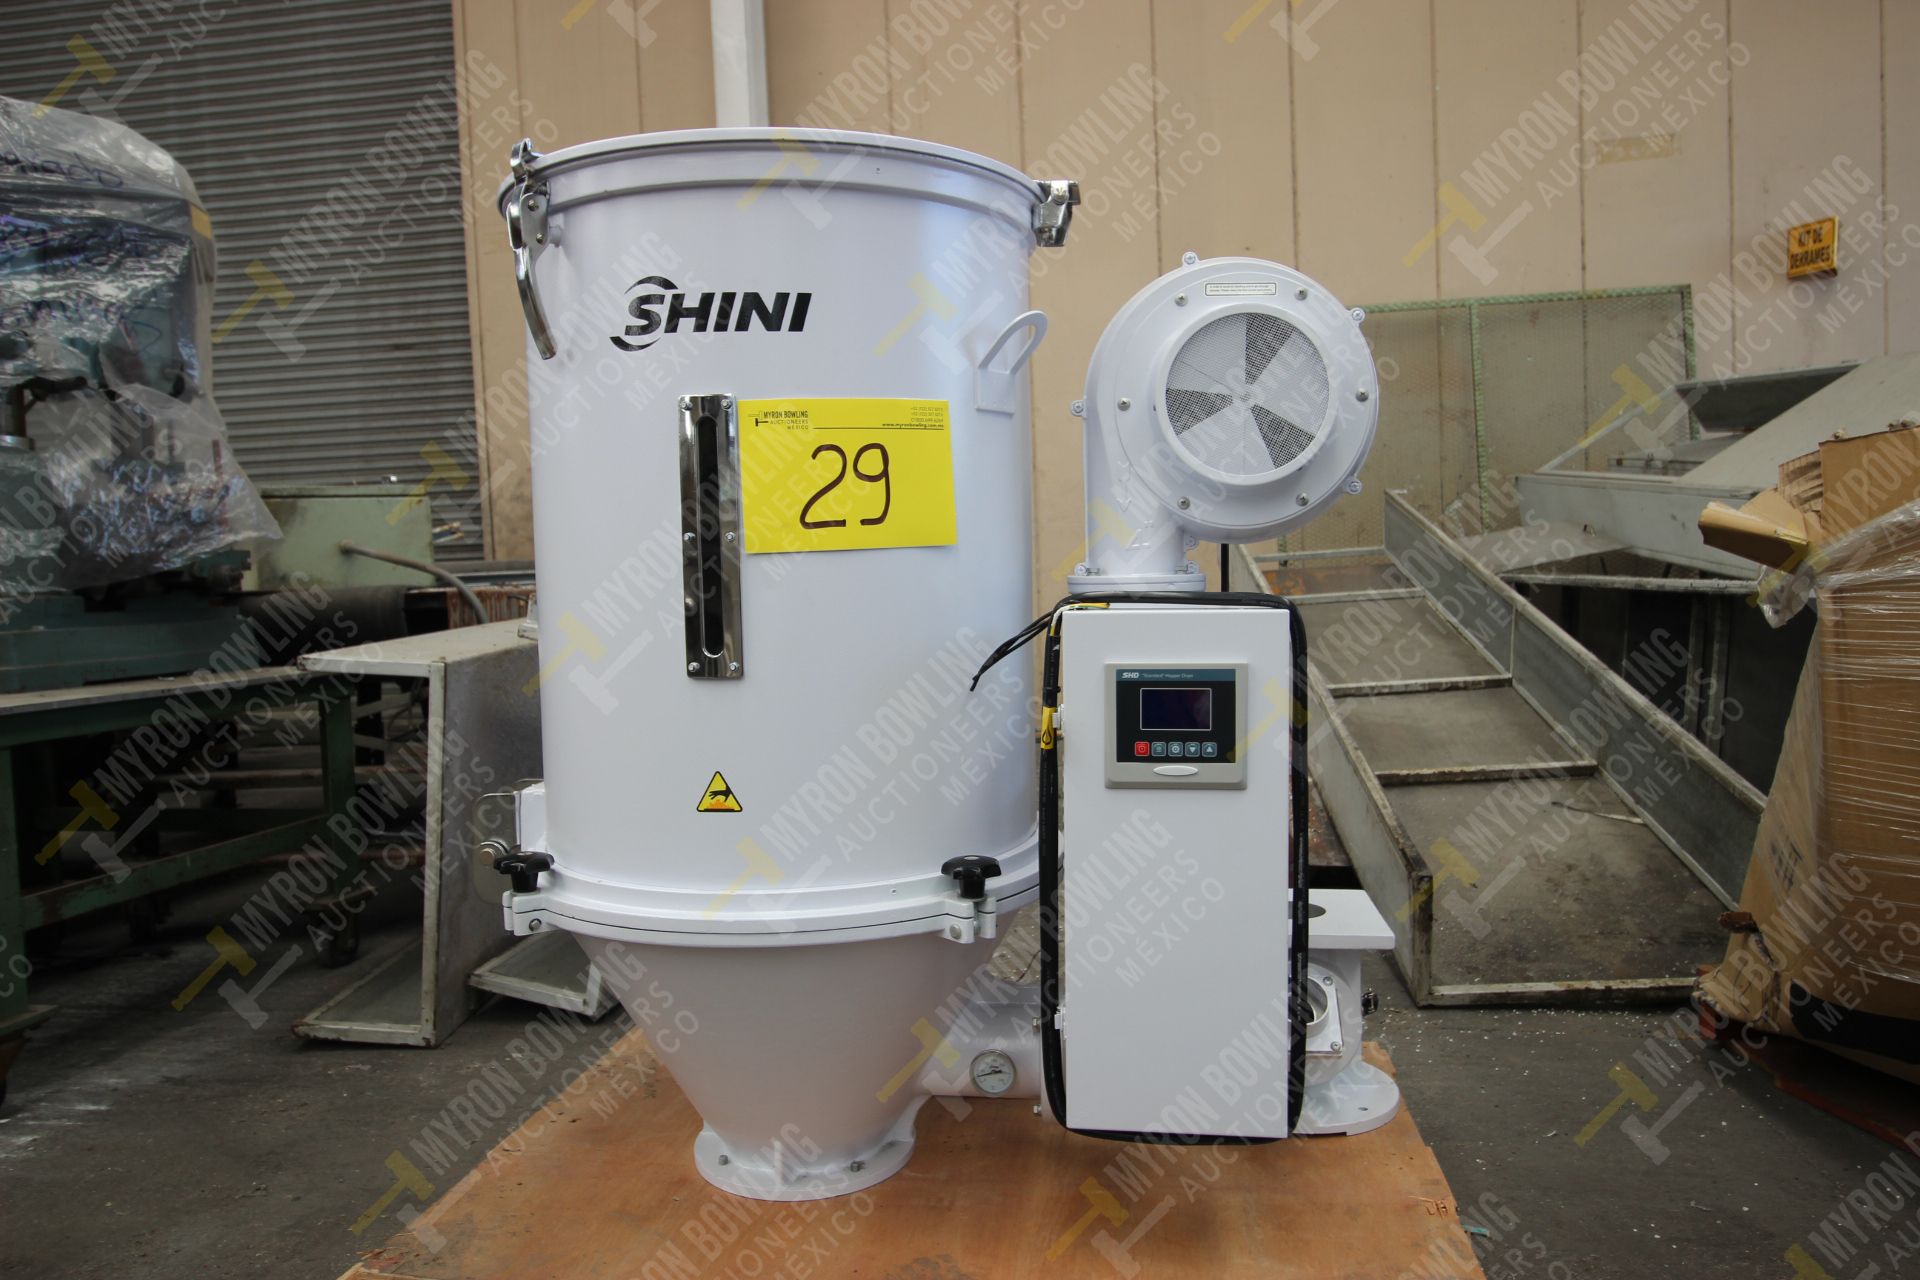 Shini Plastics Technologies 100kg. hopper dryer mod. SHD-100SL-CE, serial number 2HD16100395